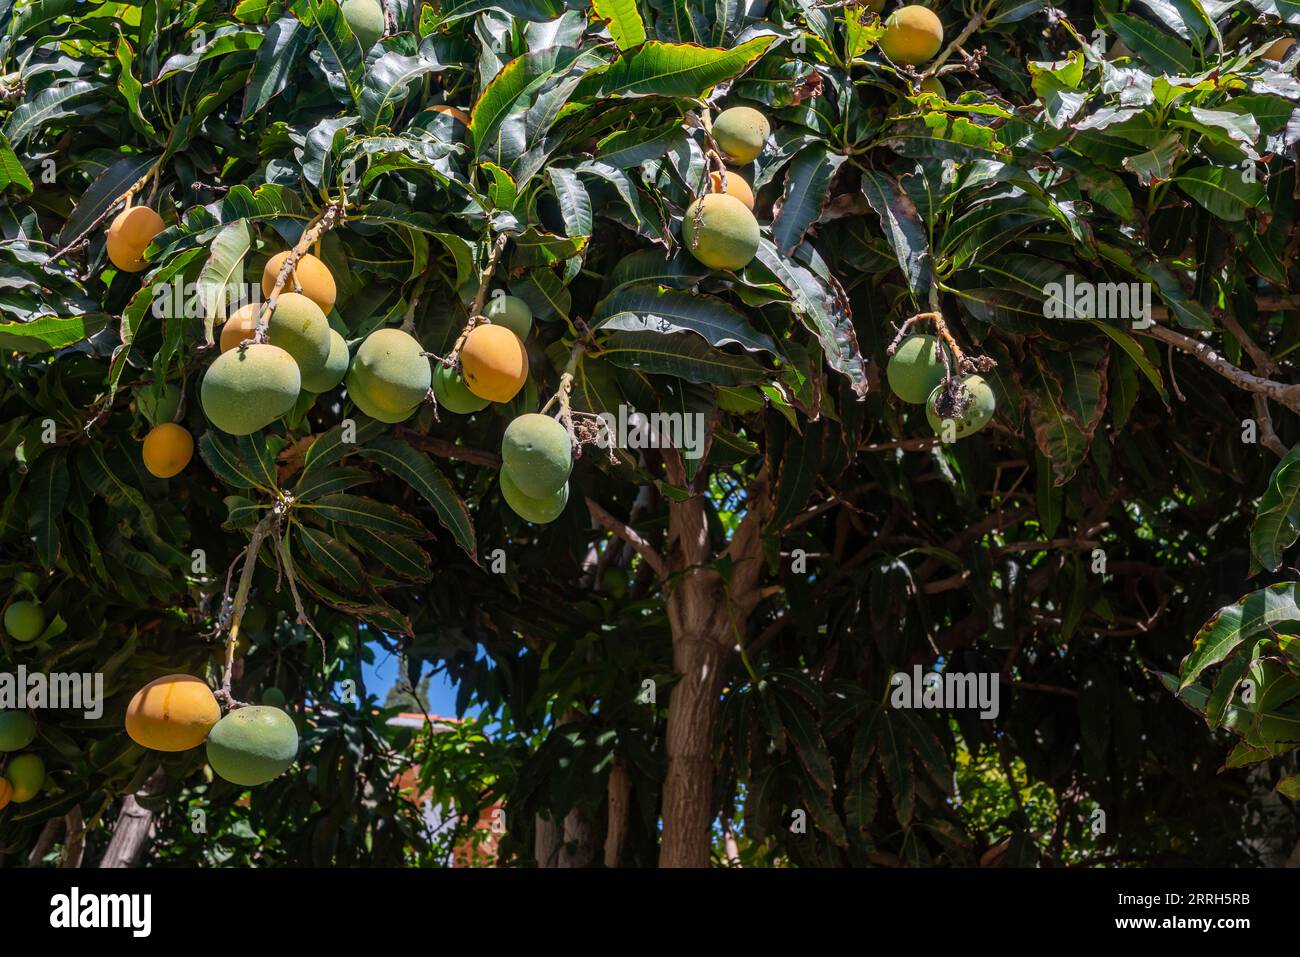 Ripe yellow and green nispero fruit growing on a tree. Japanese loquat or medlar Stock Photo